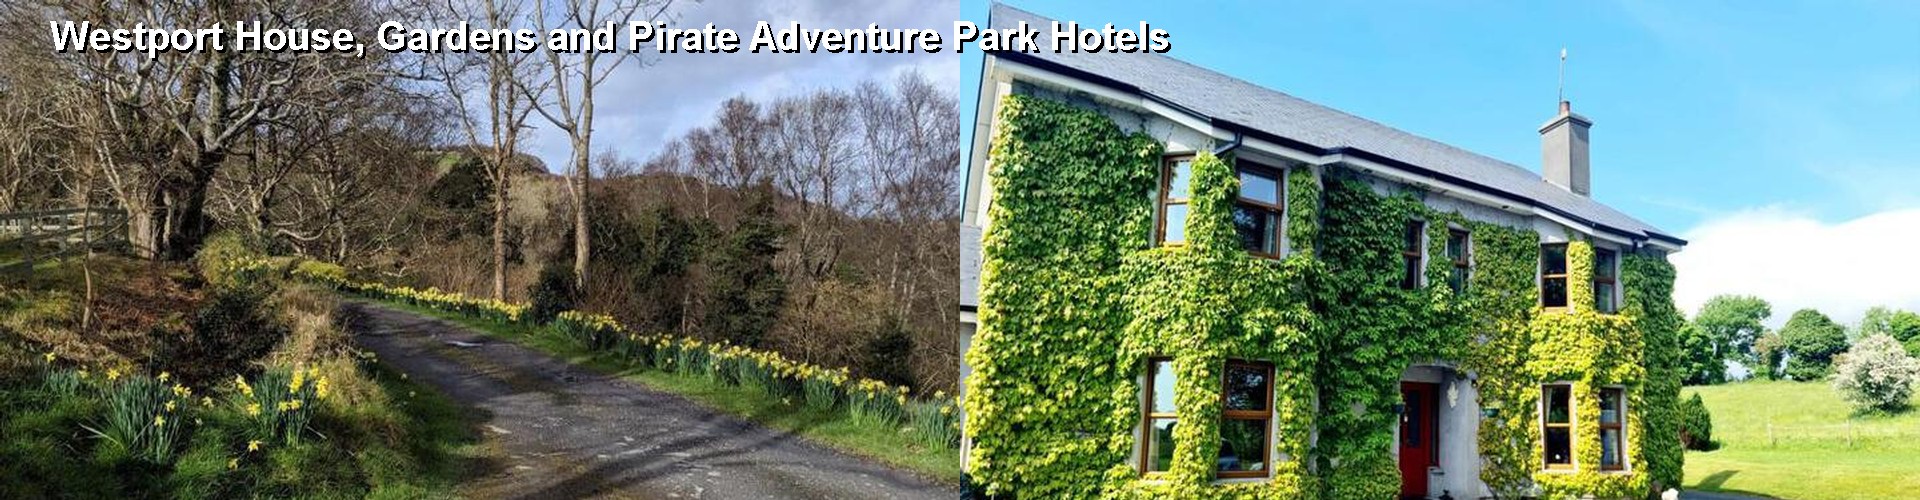 5 Best Hotels near Westport House, Gardens and Pirate Adventure Park